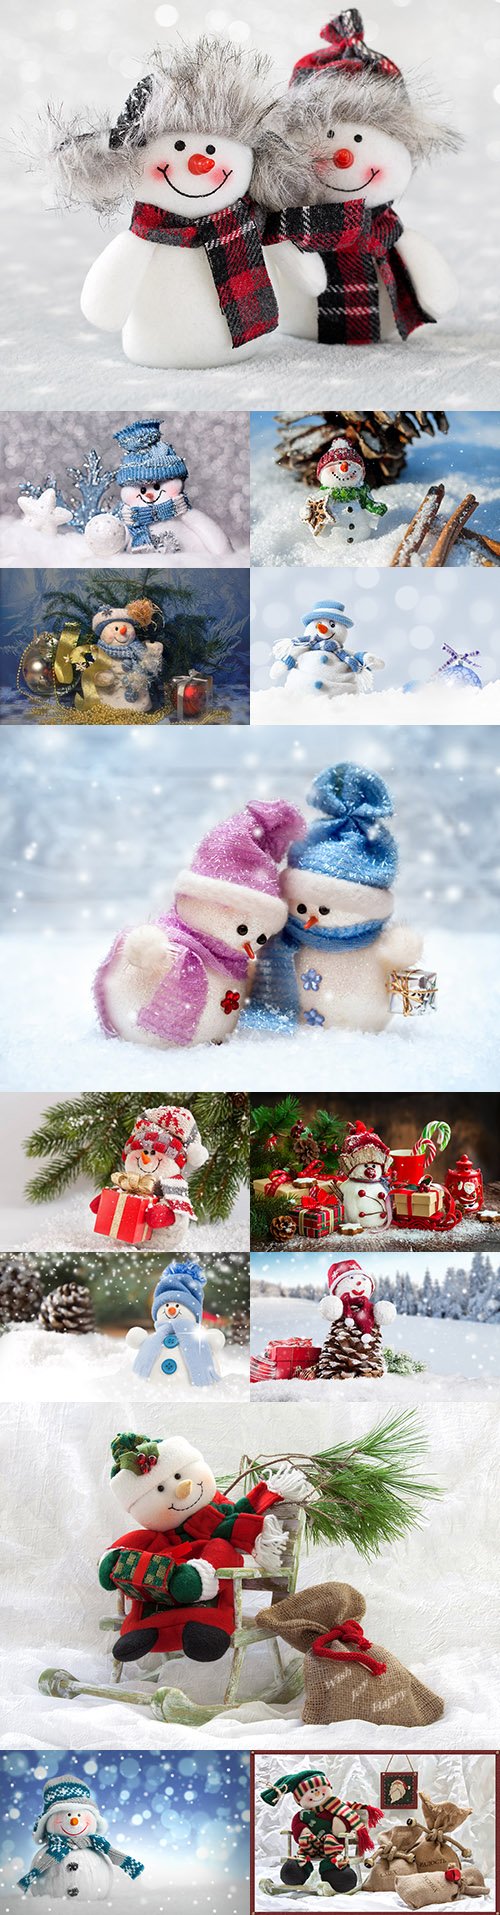 Happy Christmas funny snowman decorative composition